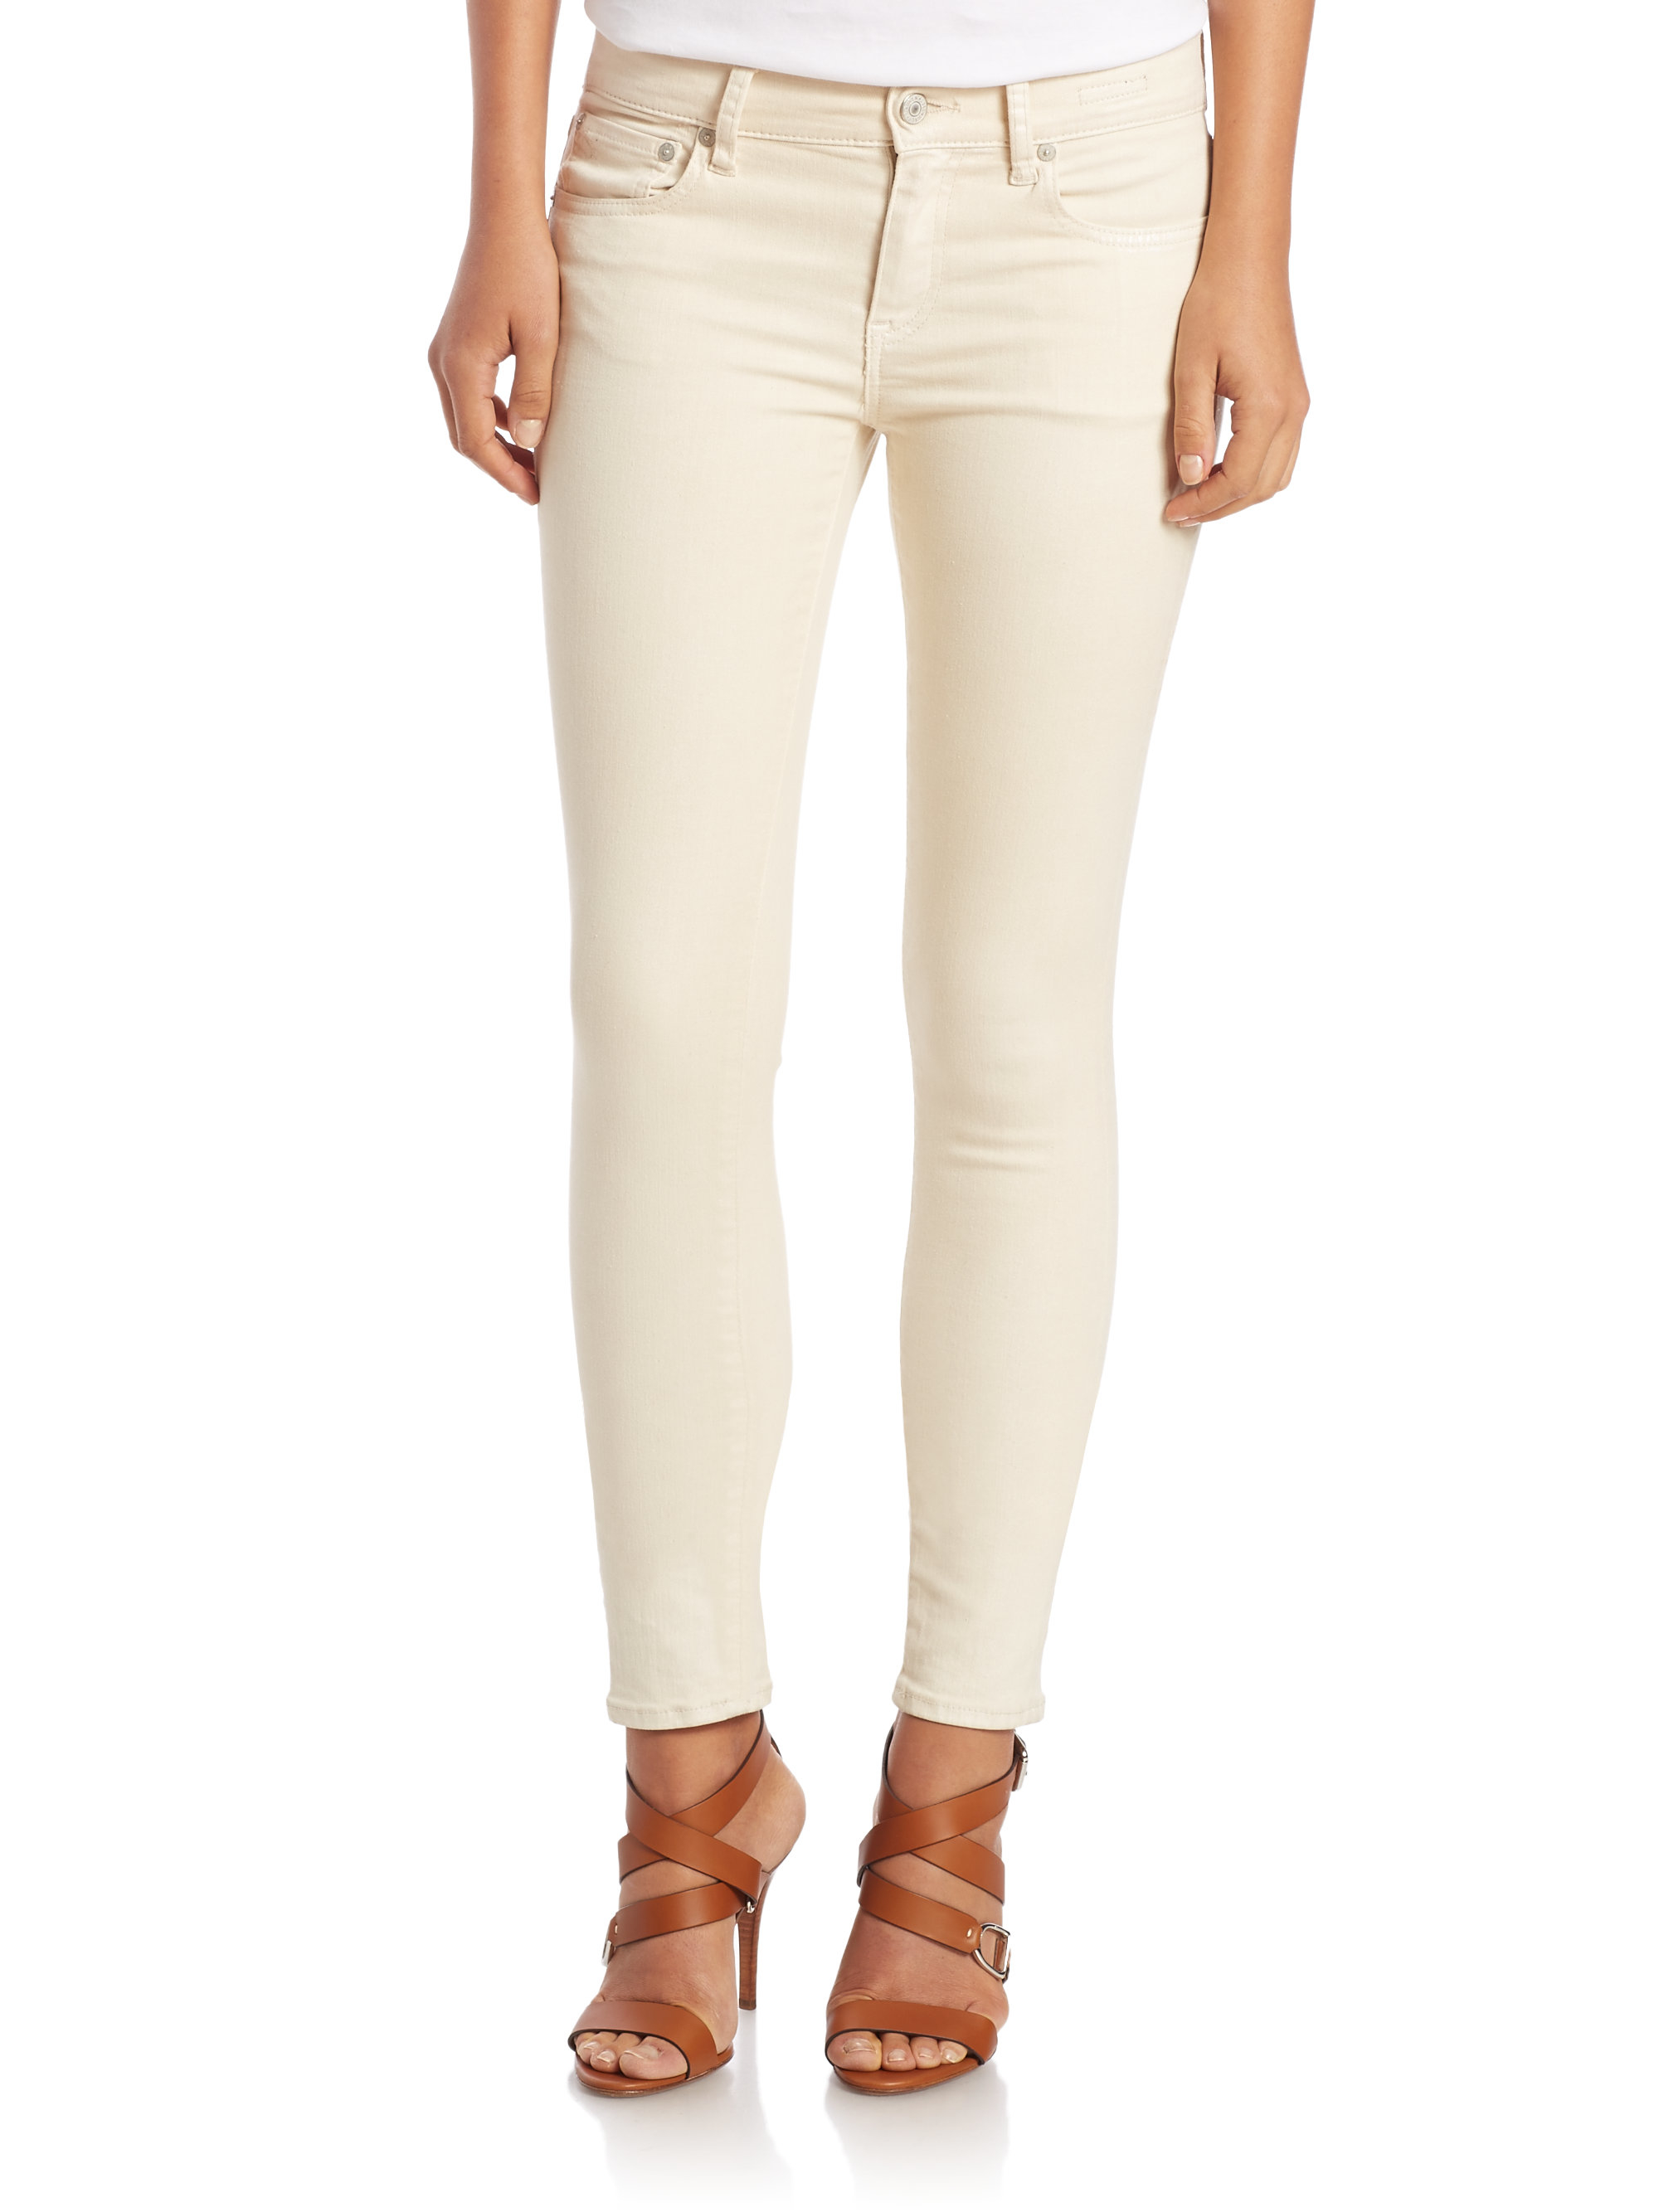 Polo Ralph Lauren Denim Skinny Jeans in Pearl Cream (White) - Lyst